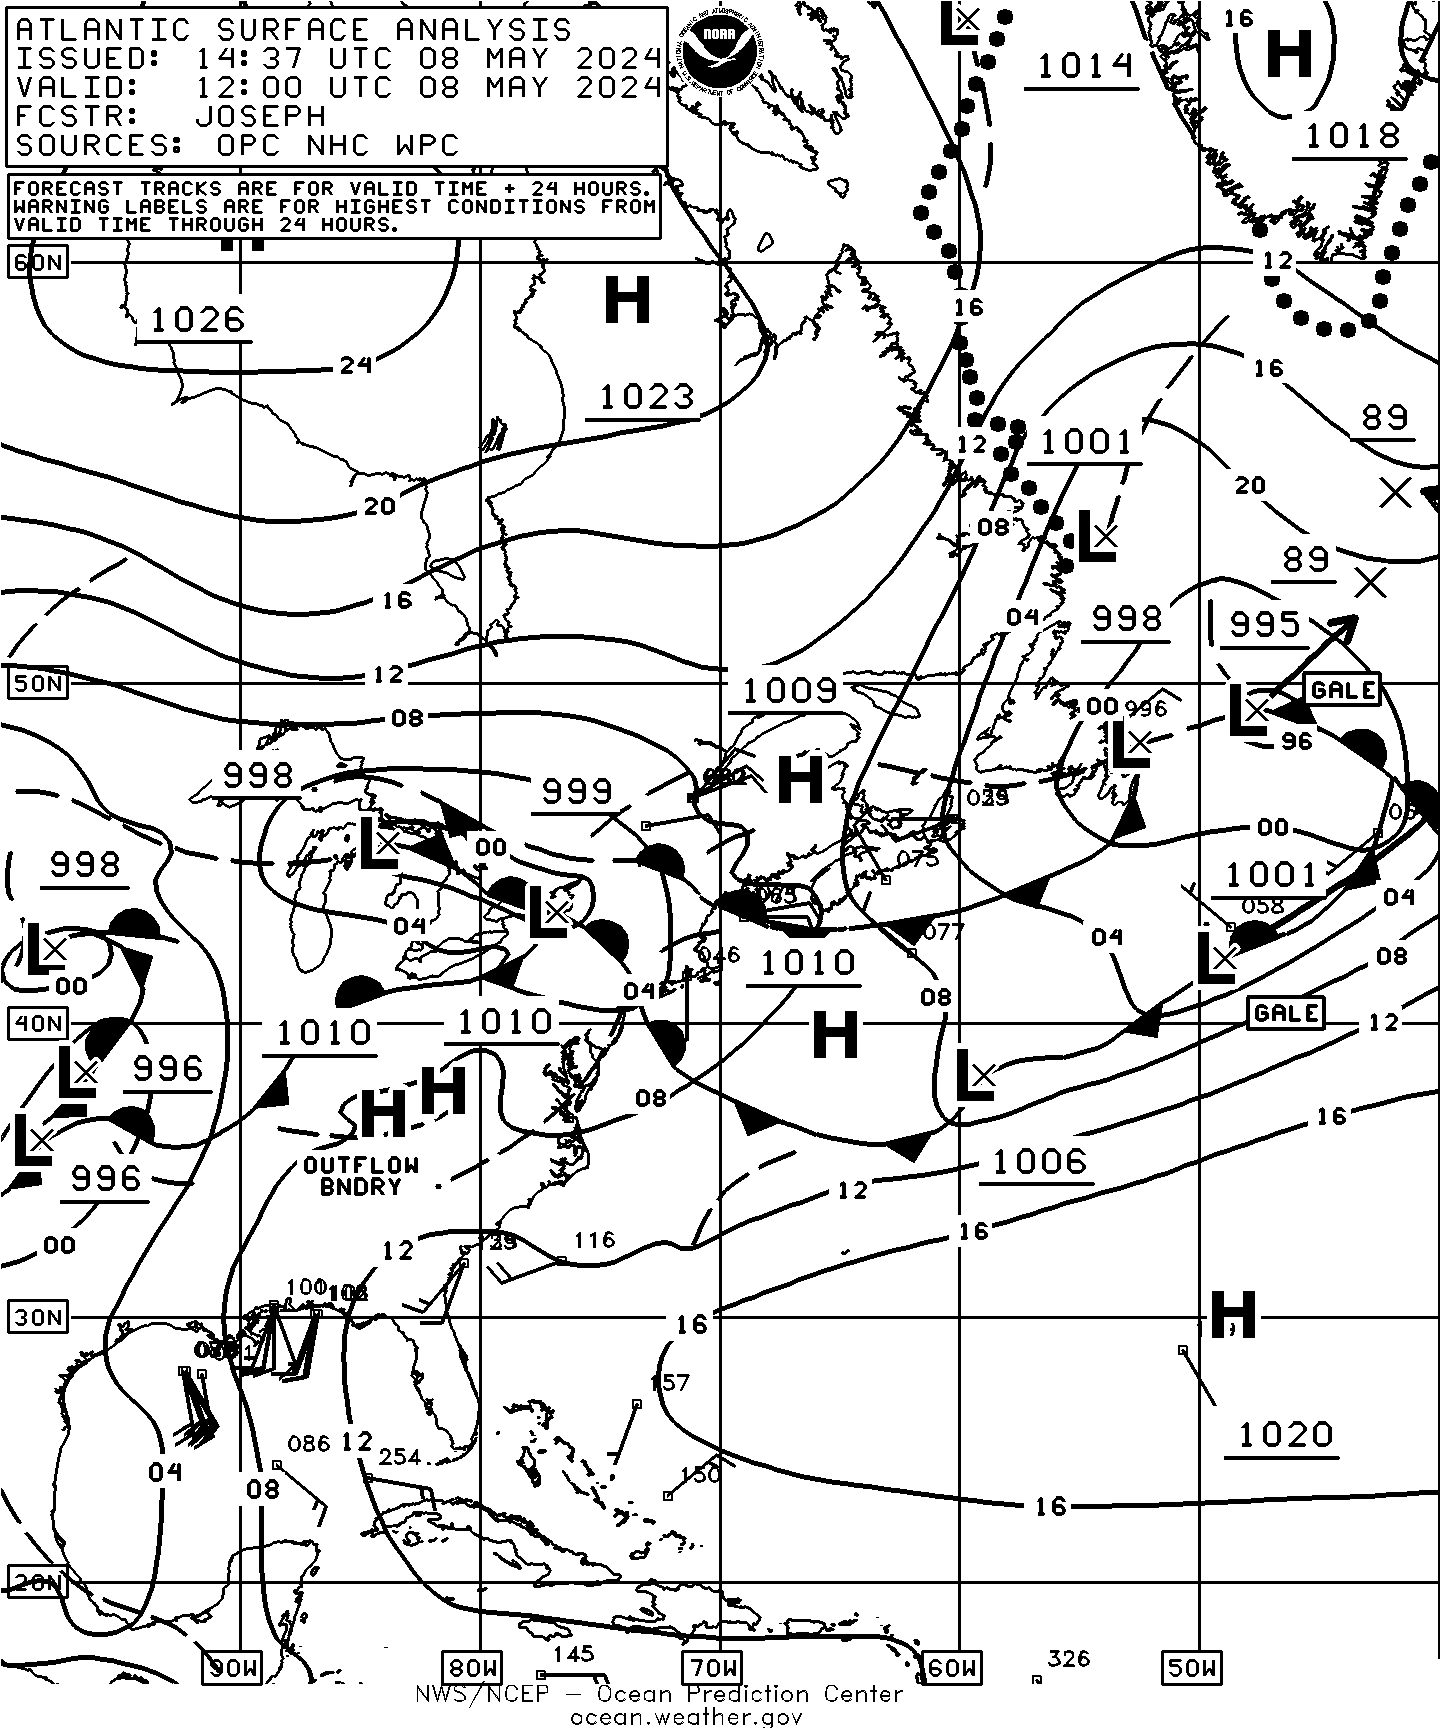 Image of Atlantic Surface Analysis